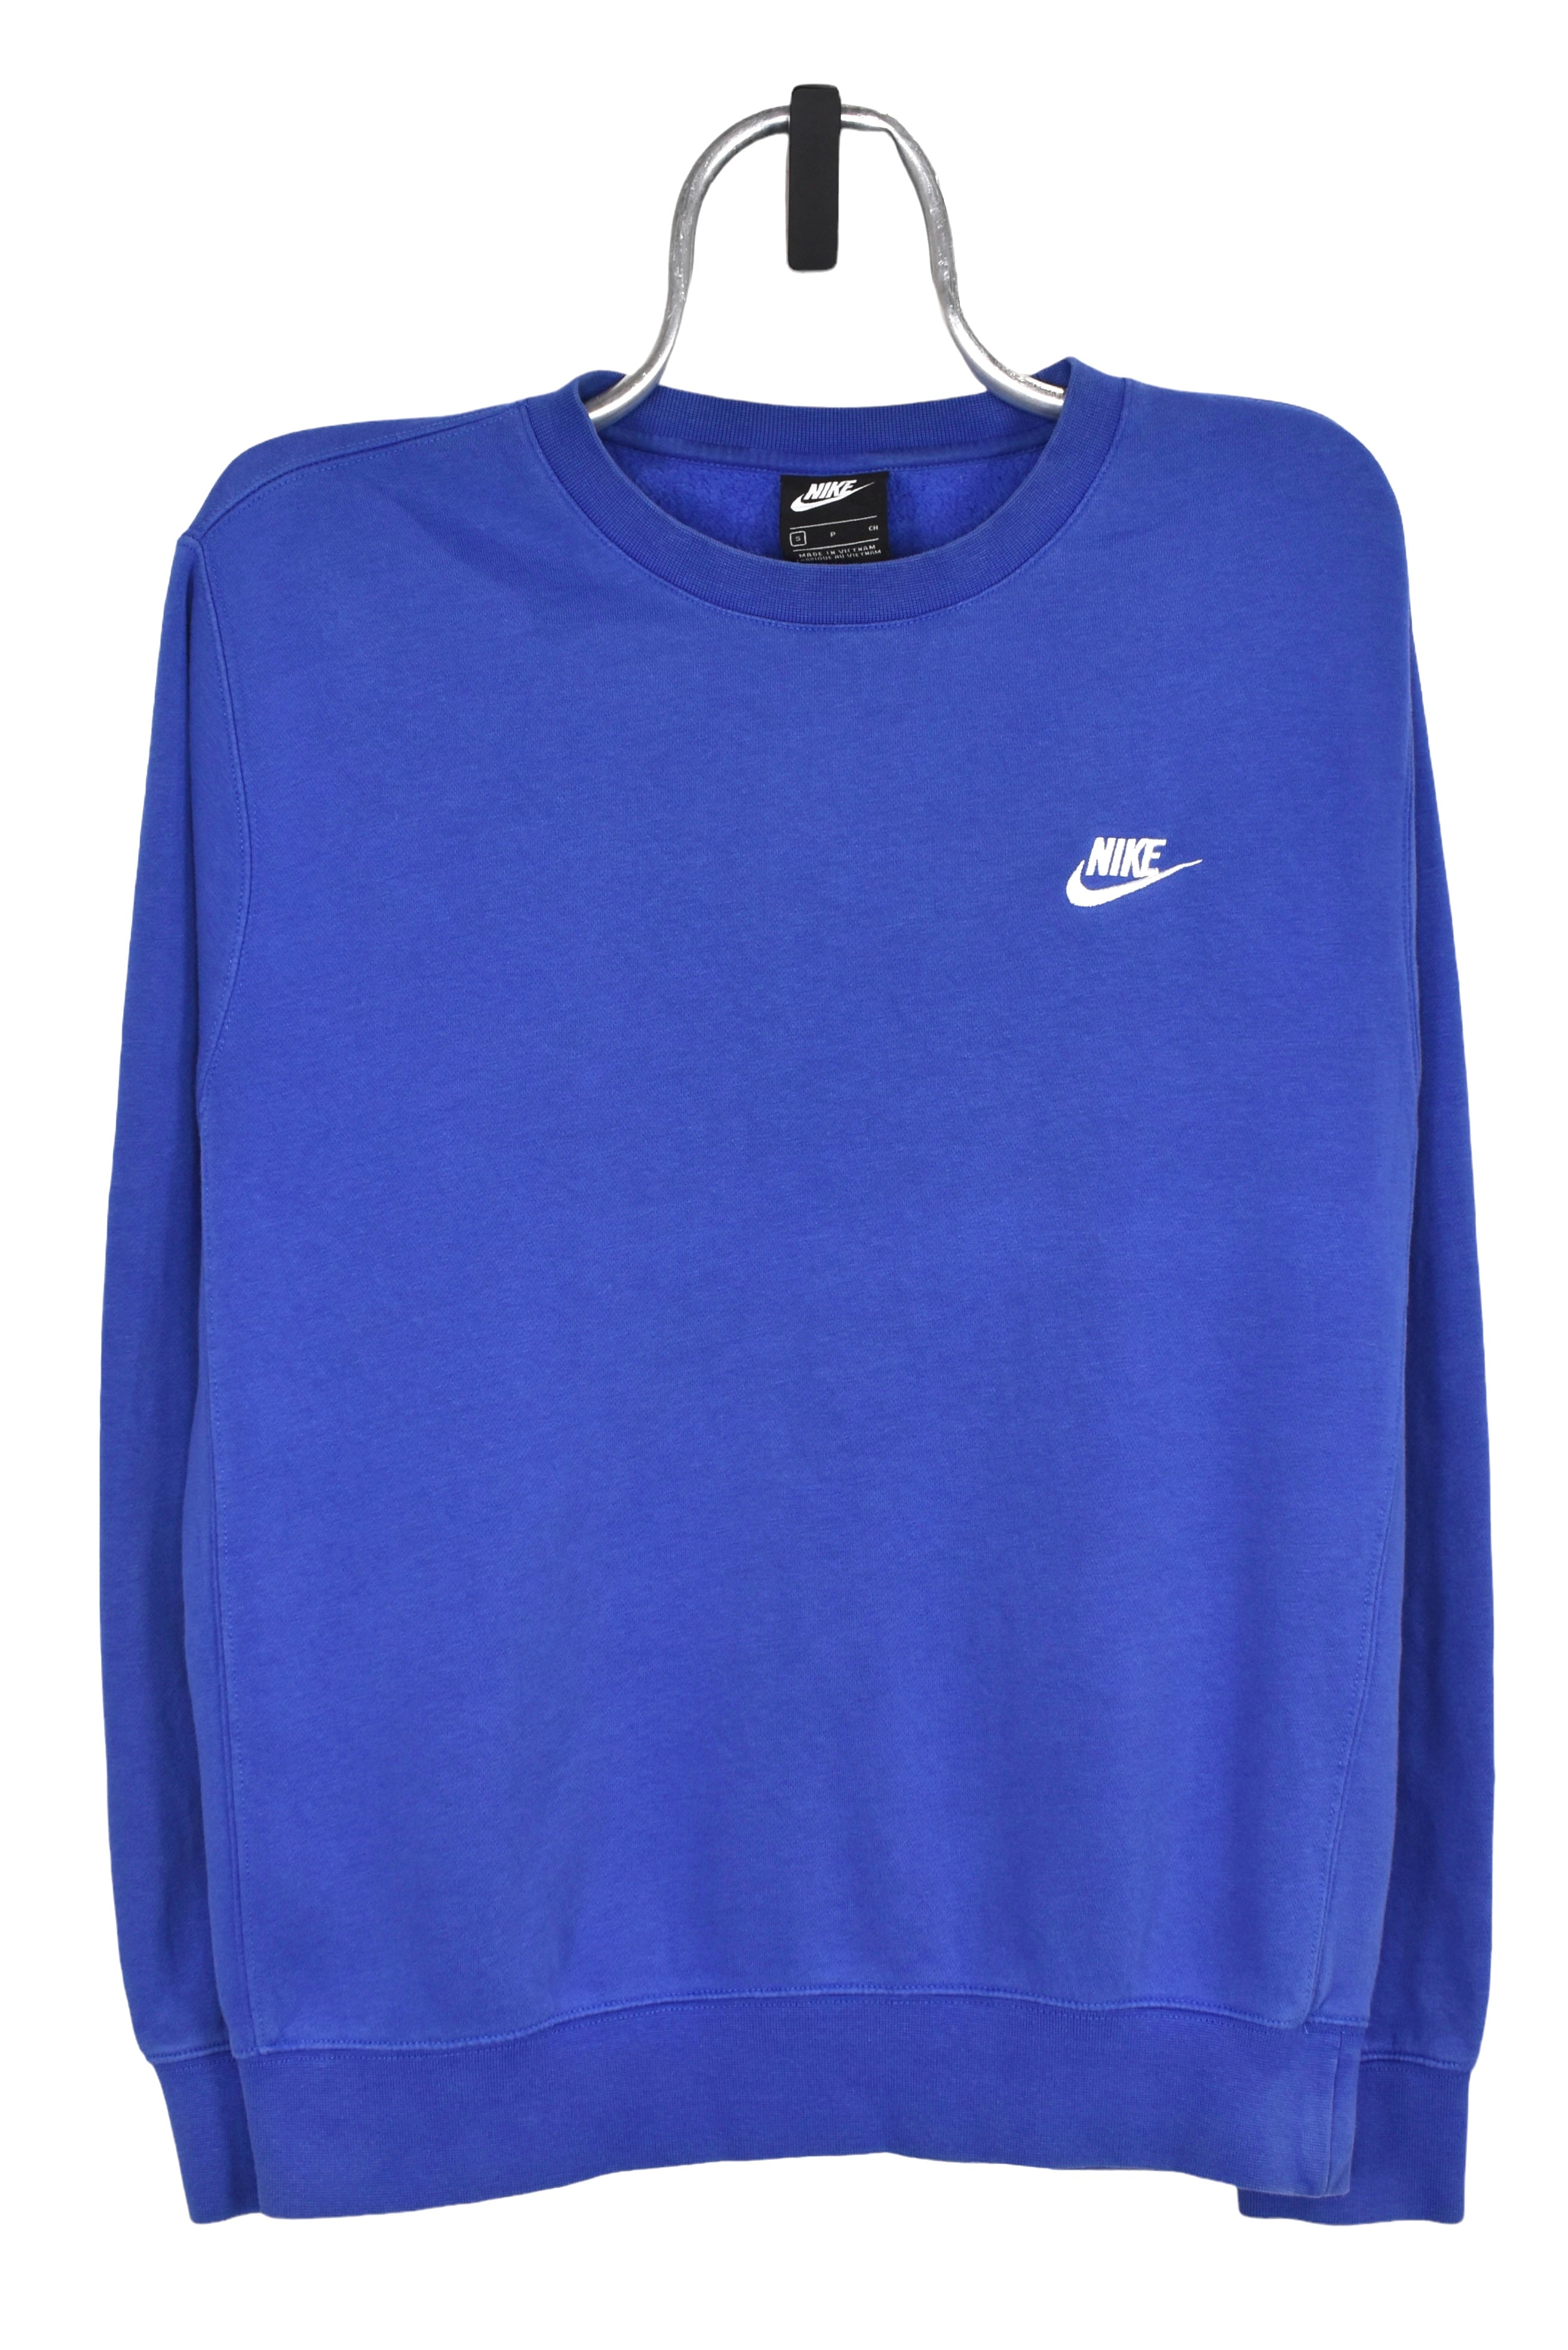 NAUTICA Ocean Sportsman Polo Shirt Big Logo Embroidery Unisex Medium Size -   New Zealand